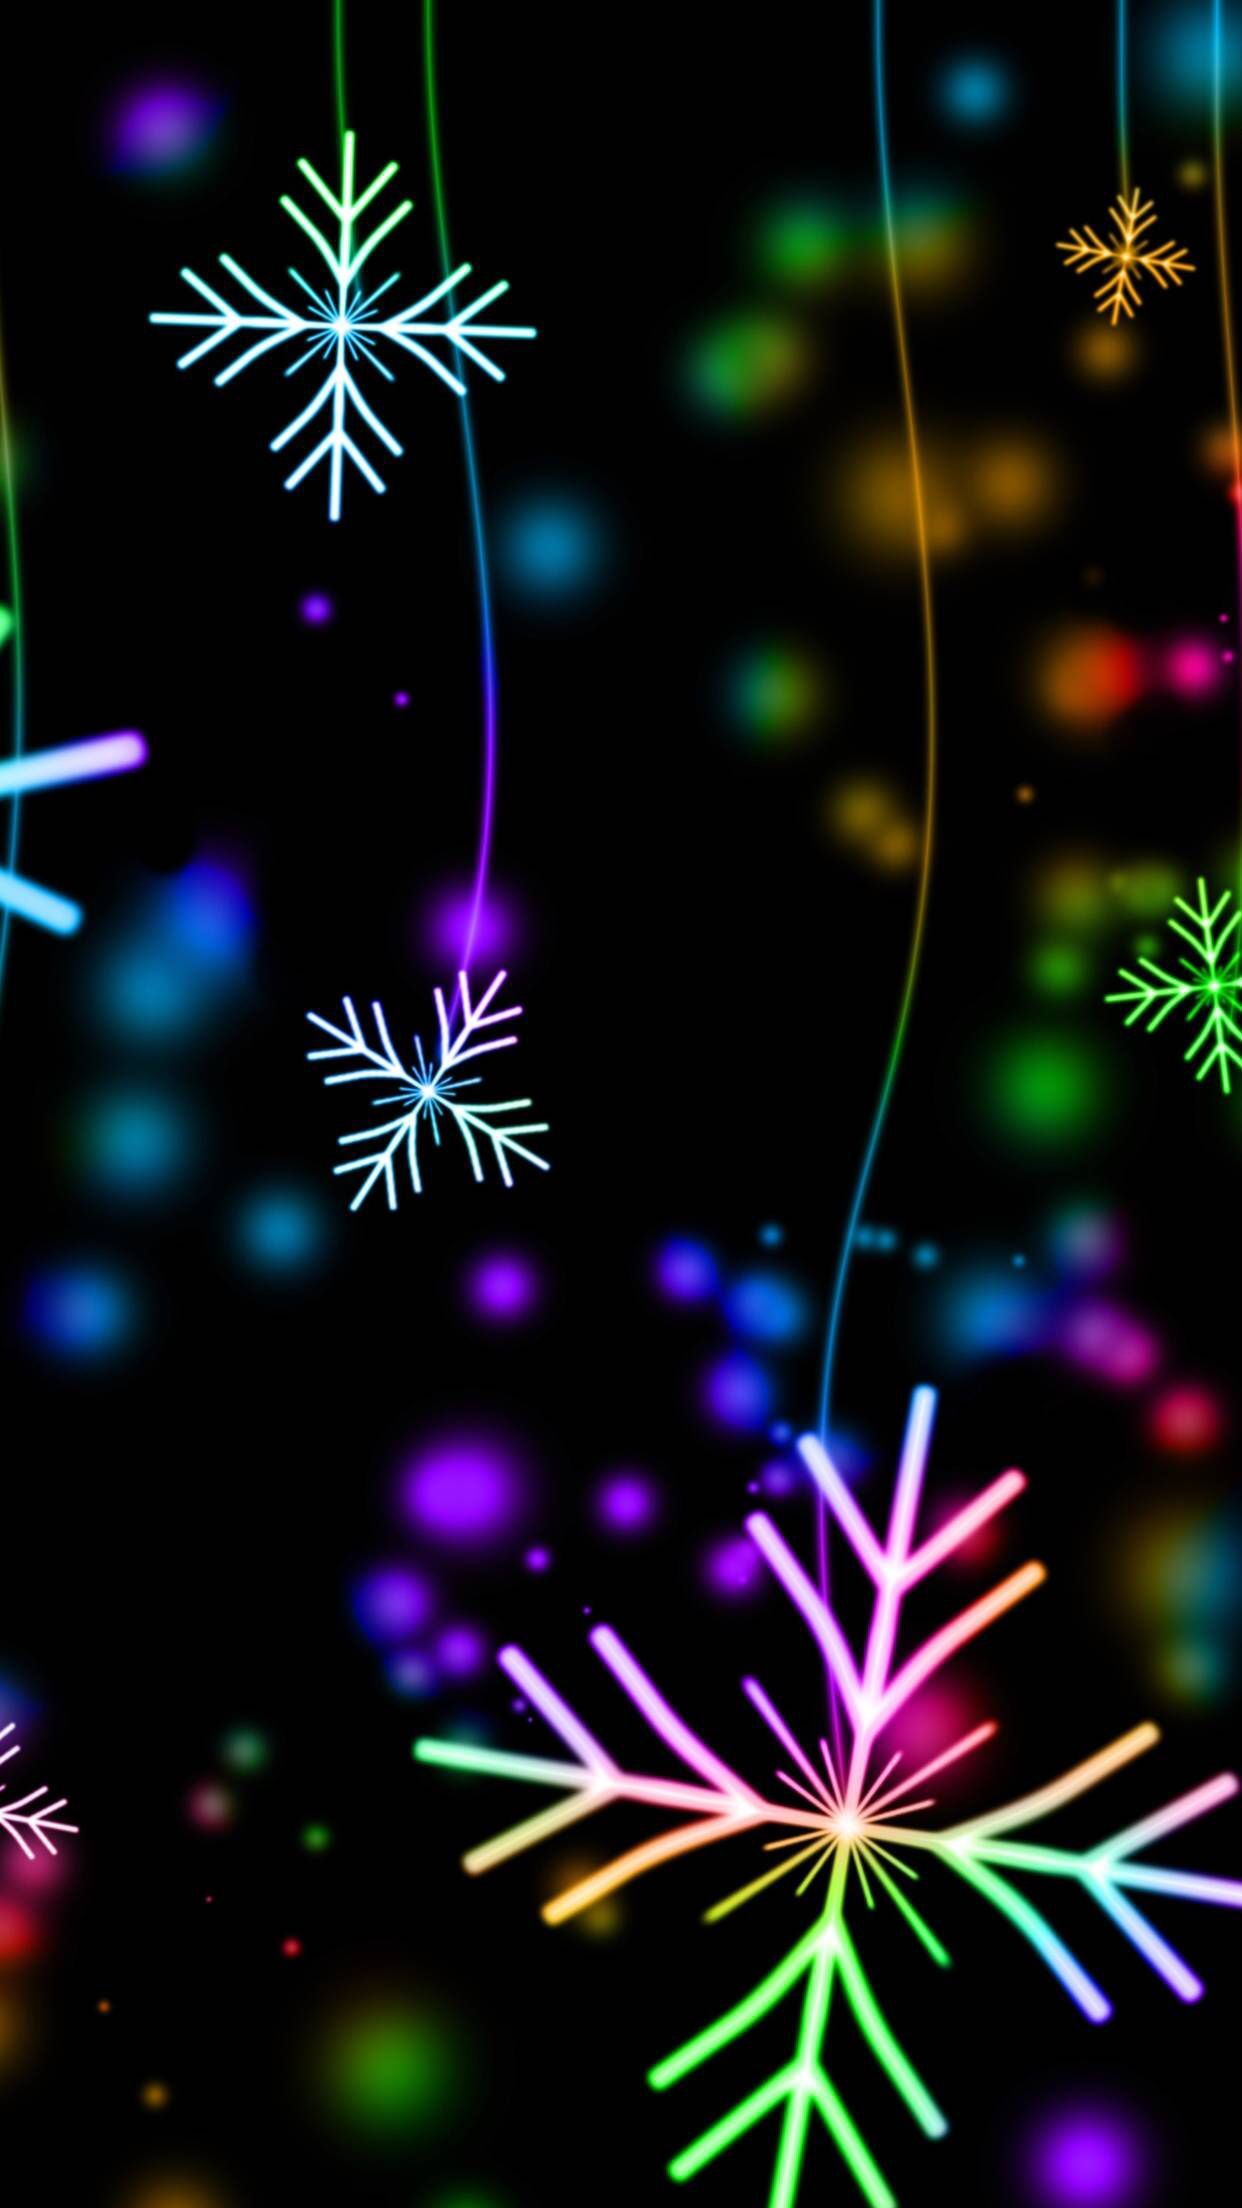 Snowflakes. iPhone wallpaper, All things christmas, Wallpaper